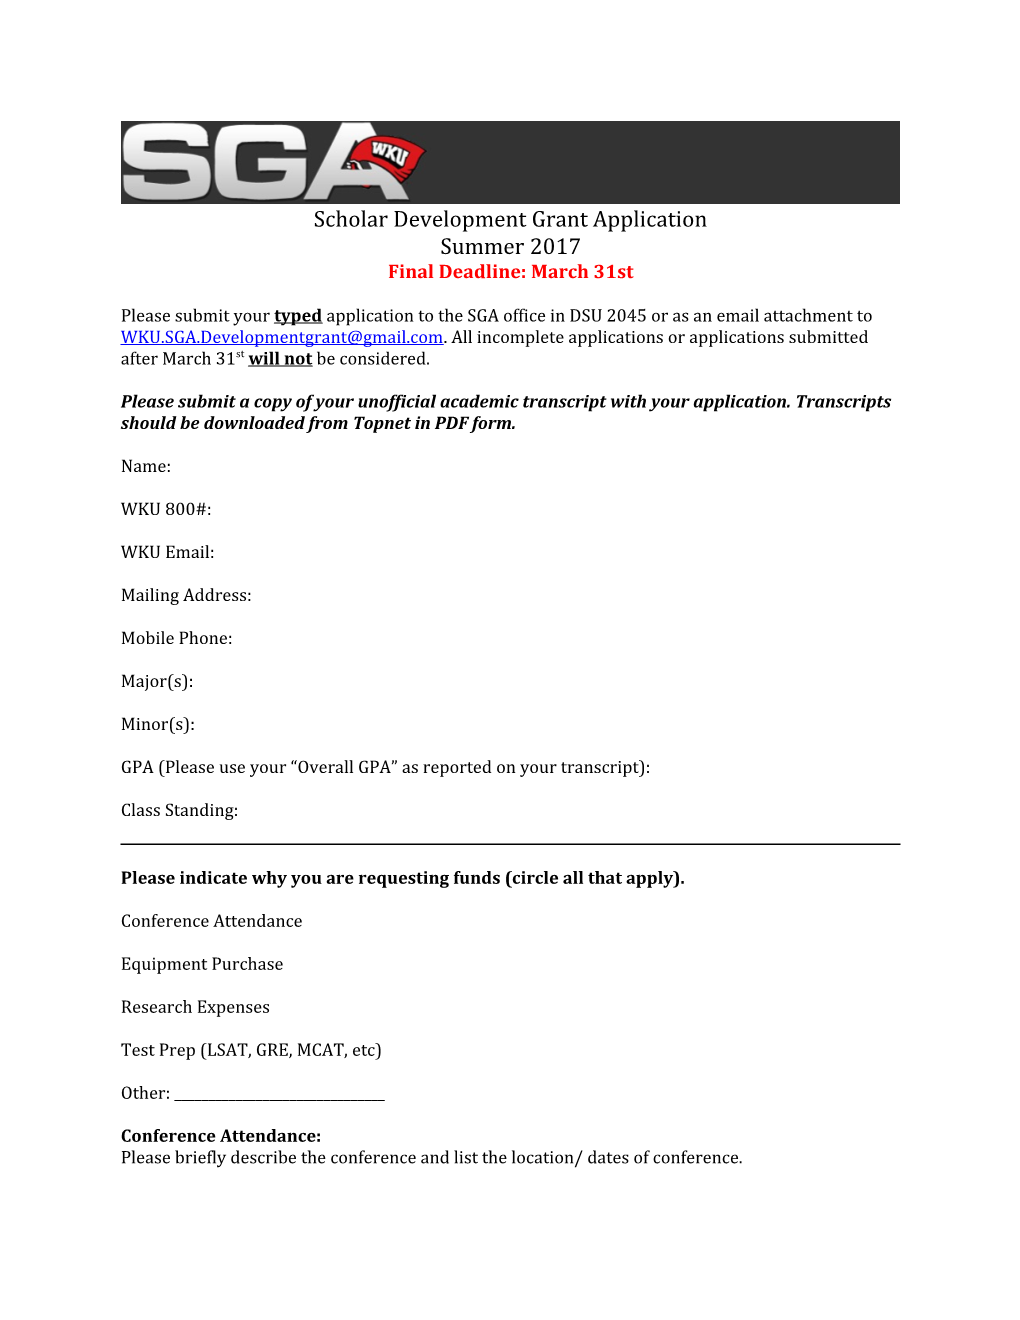 SGA Scholar Development Grant Application